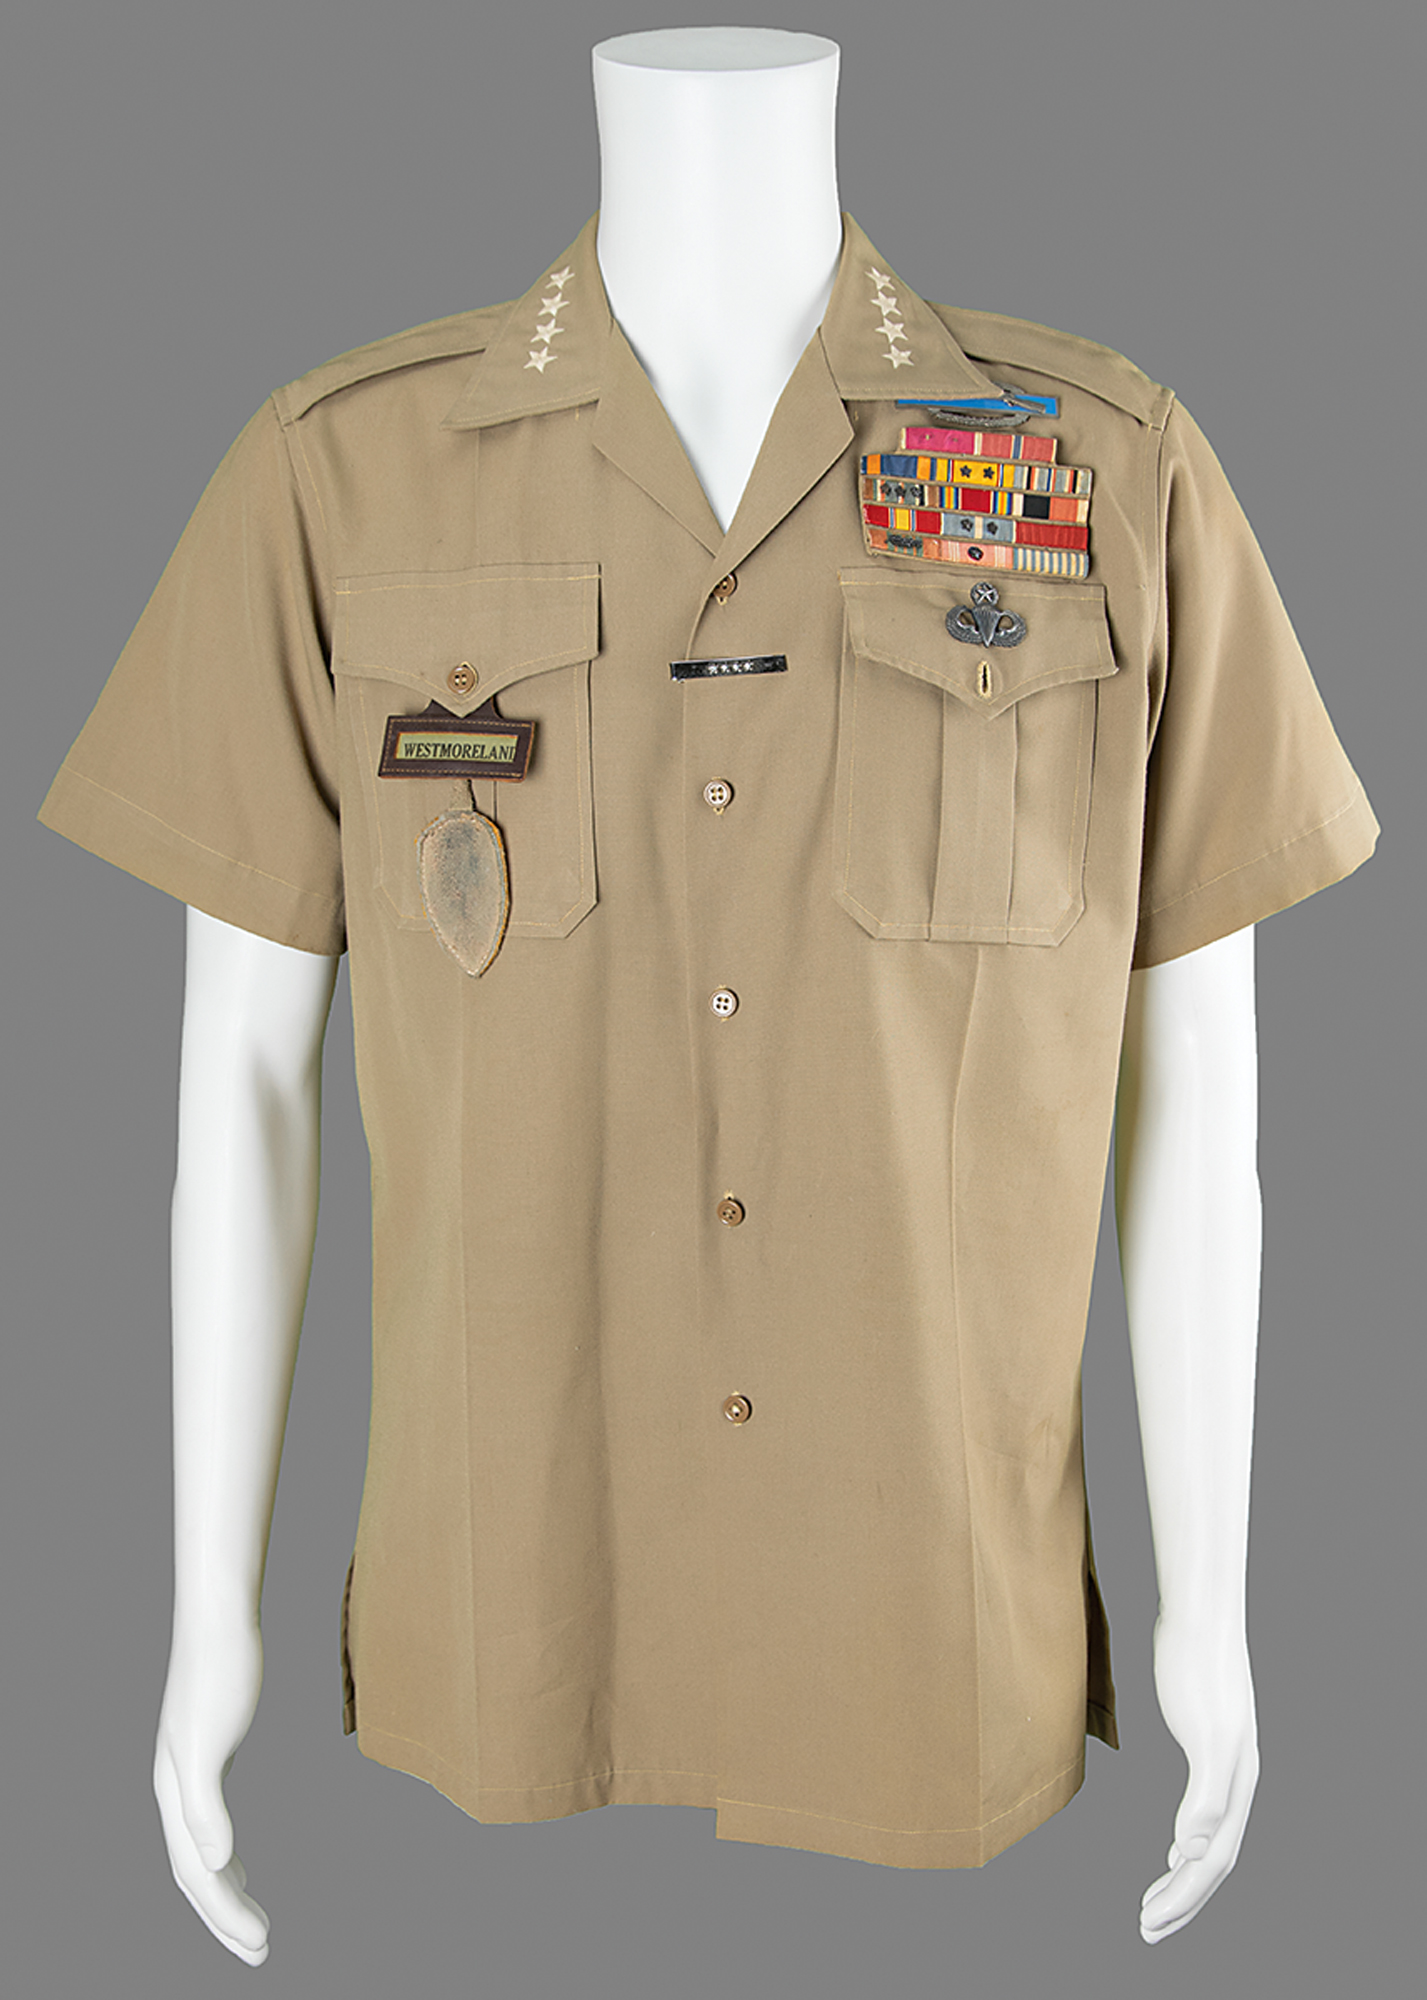 General William Westmoreland's Military Duty Uniform Shirt | Sold